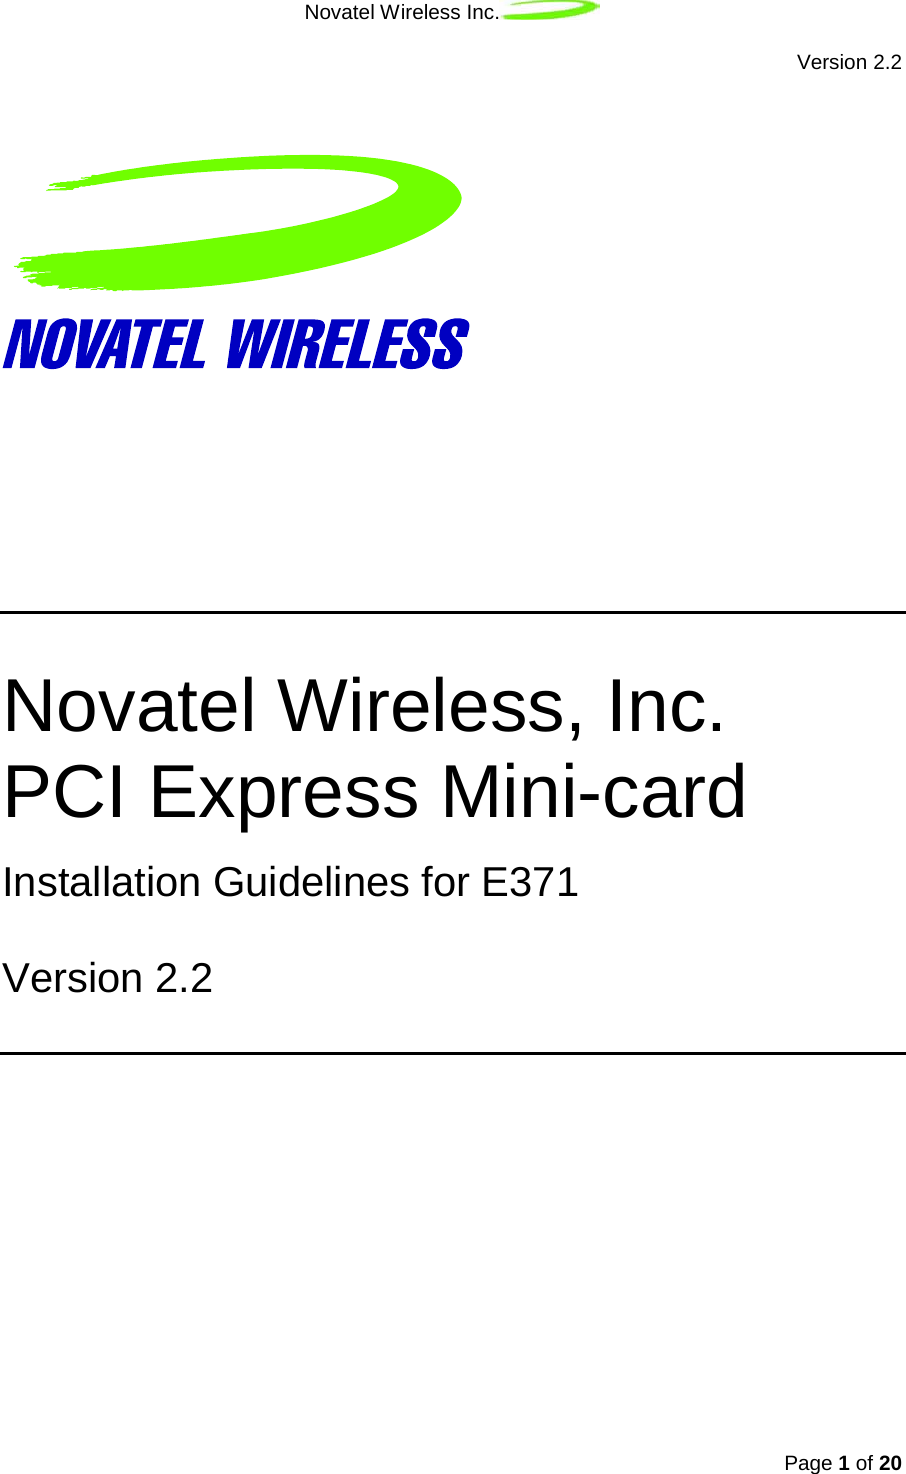 Novatel Wireless Inc.   Version 2.2 Page 1 of 20                  Novatel Wireless, Inc. PCI Express Mini-card  Installation Guidelines for E371  Version 2.2     